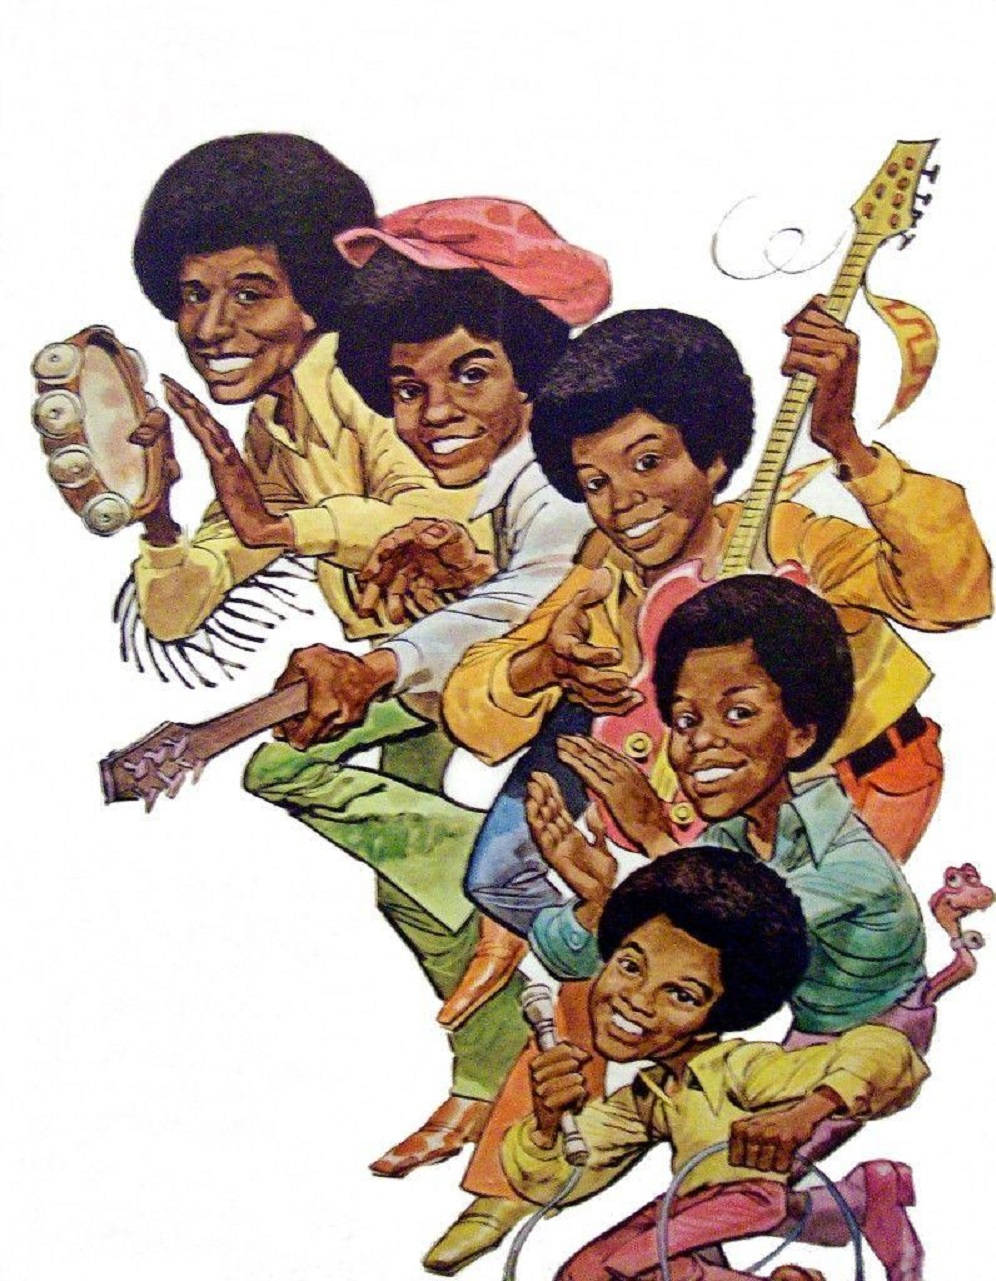 American Pop Band Jackson 5 And Berry Gordy Cartoon Wallpaper